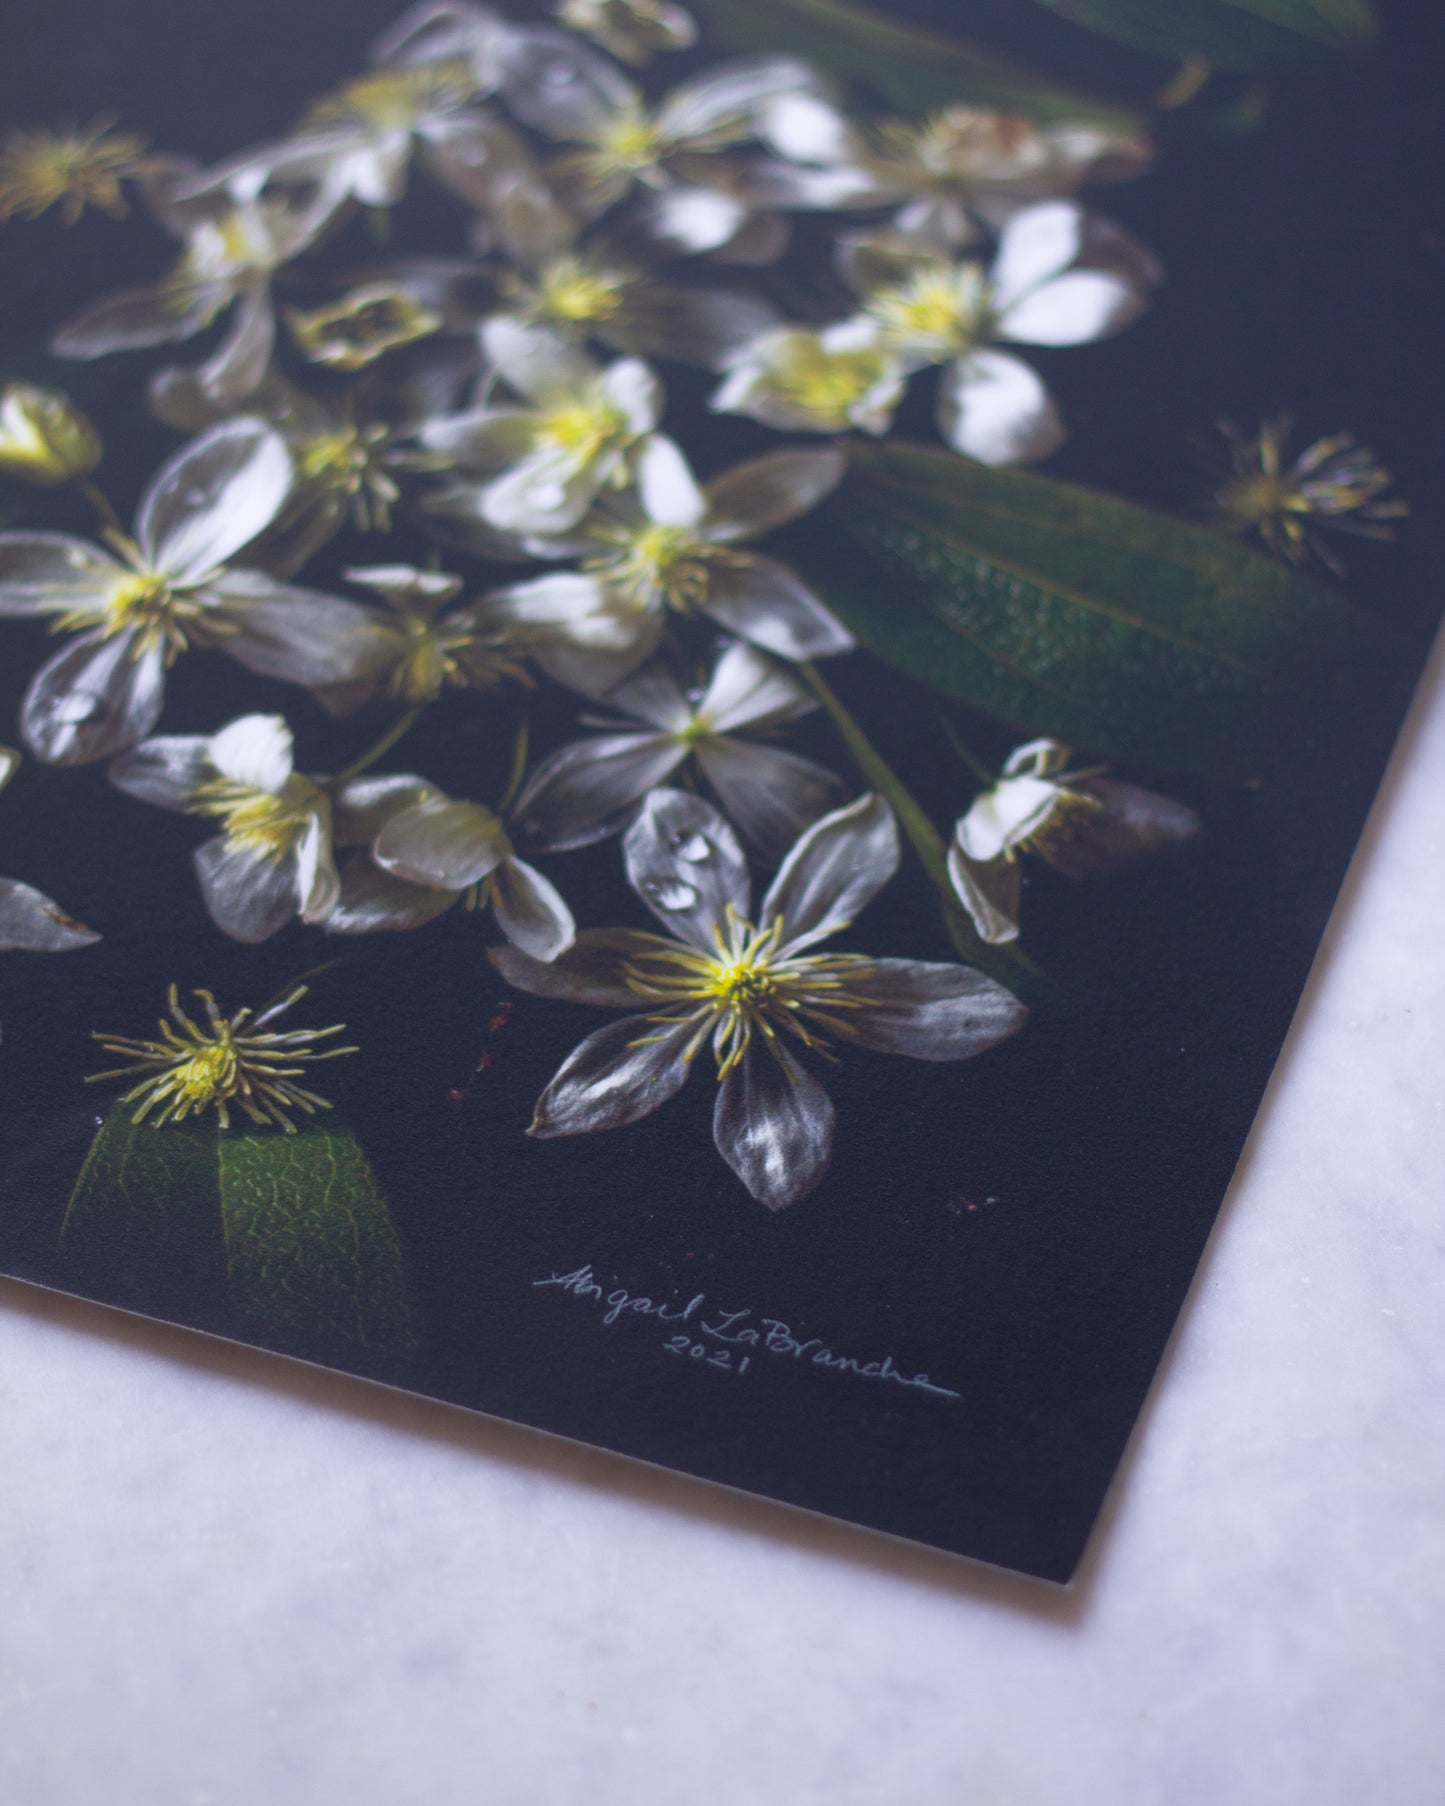 Wild Almond Blossom Limited Edition Print